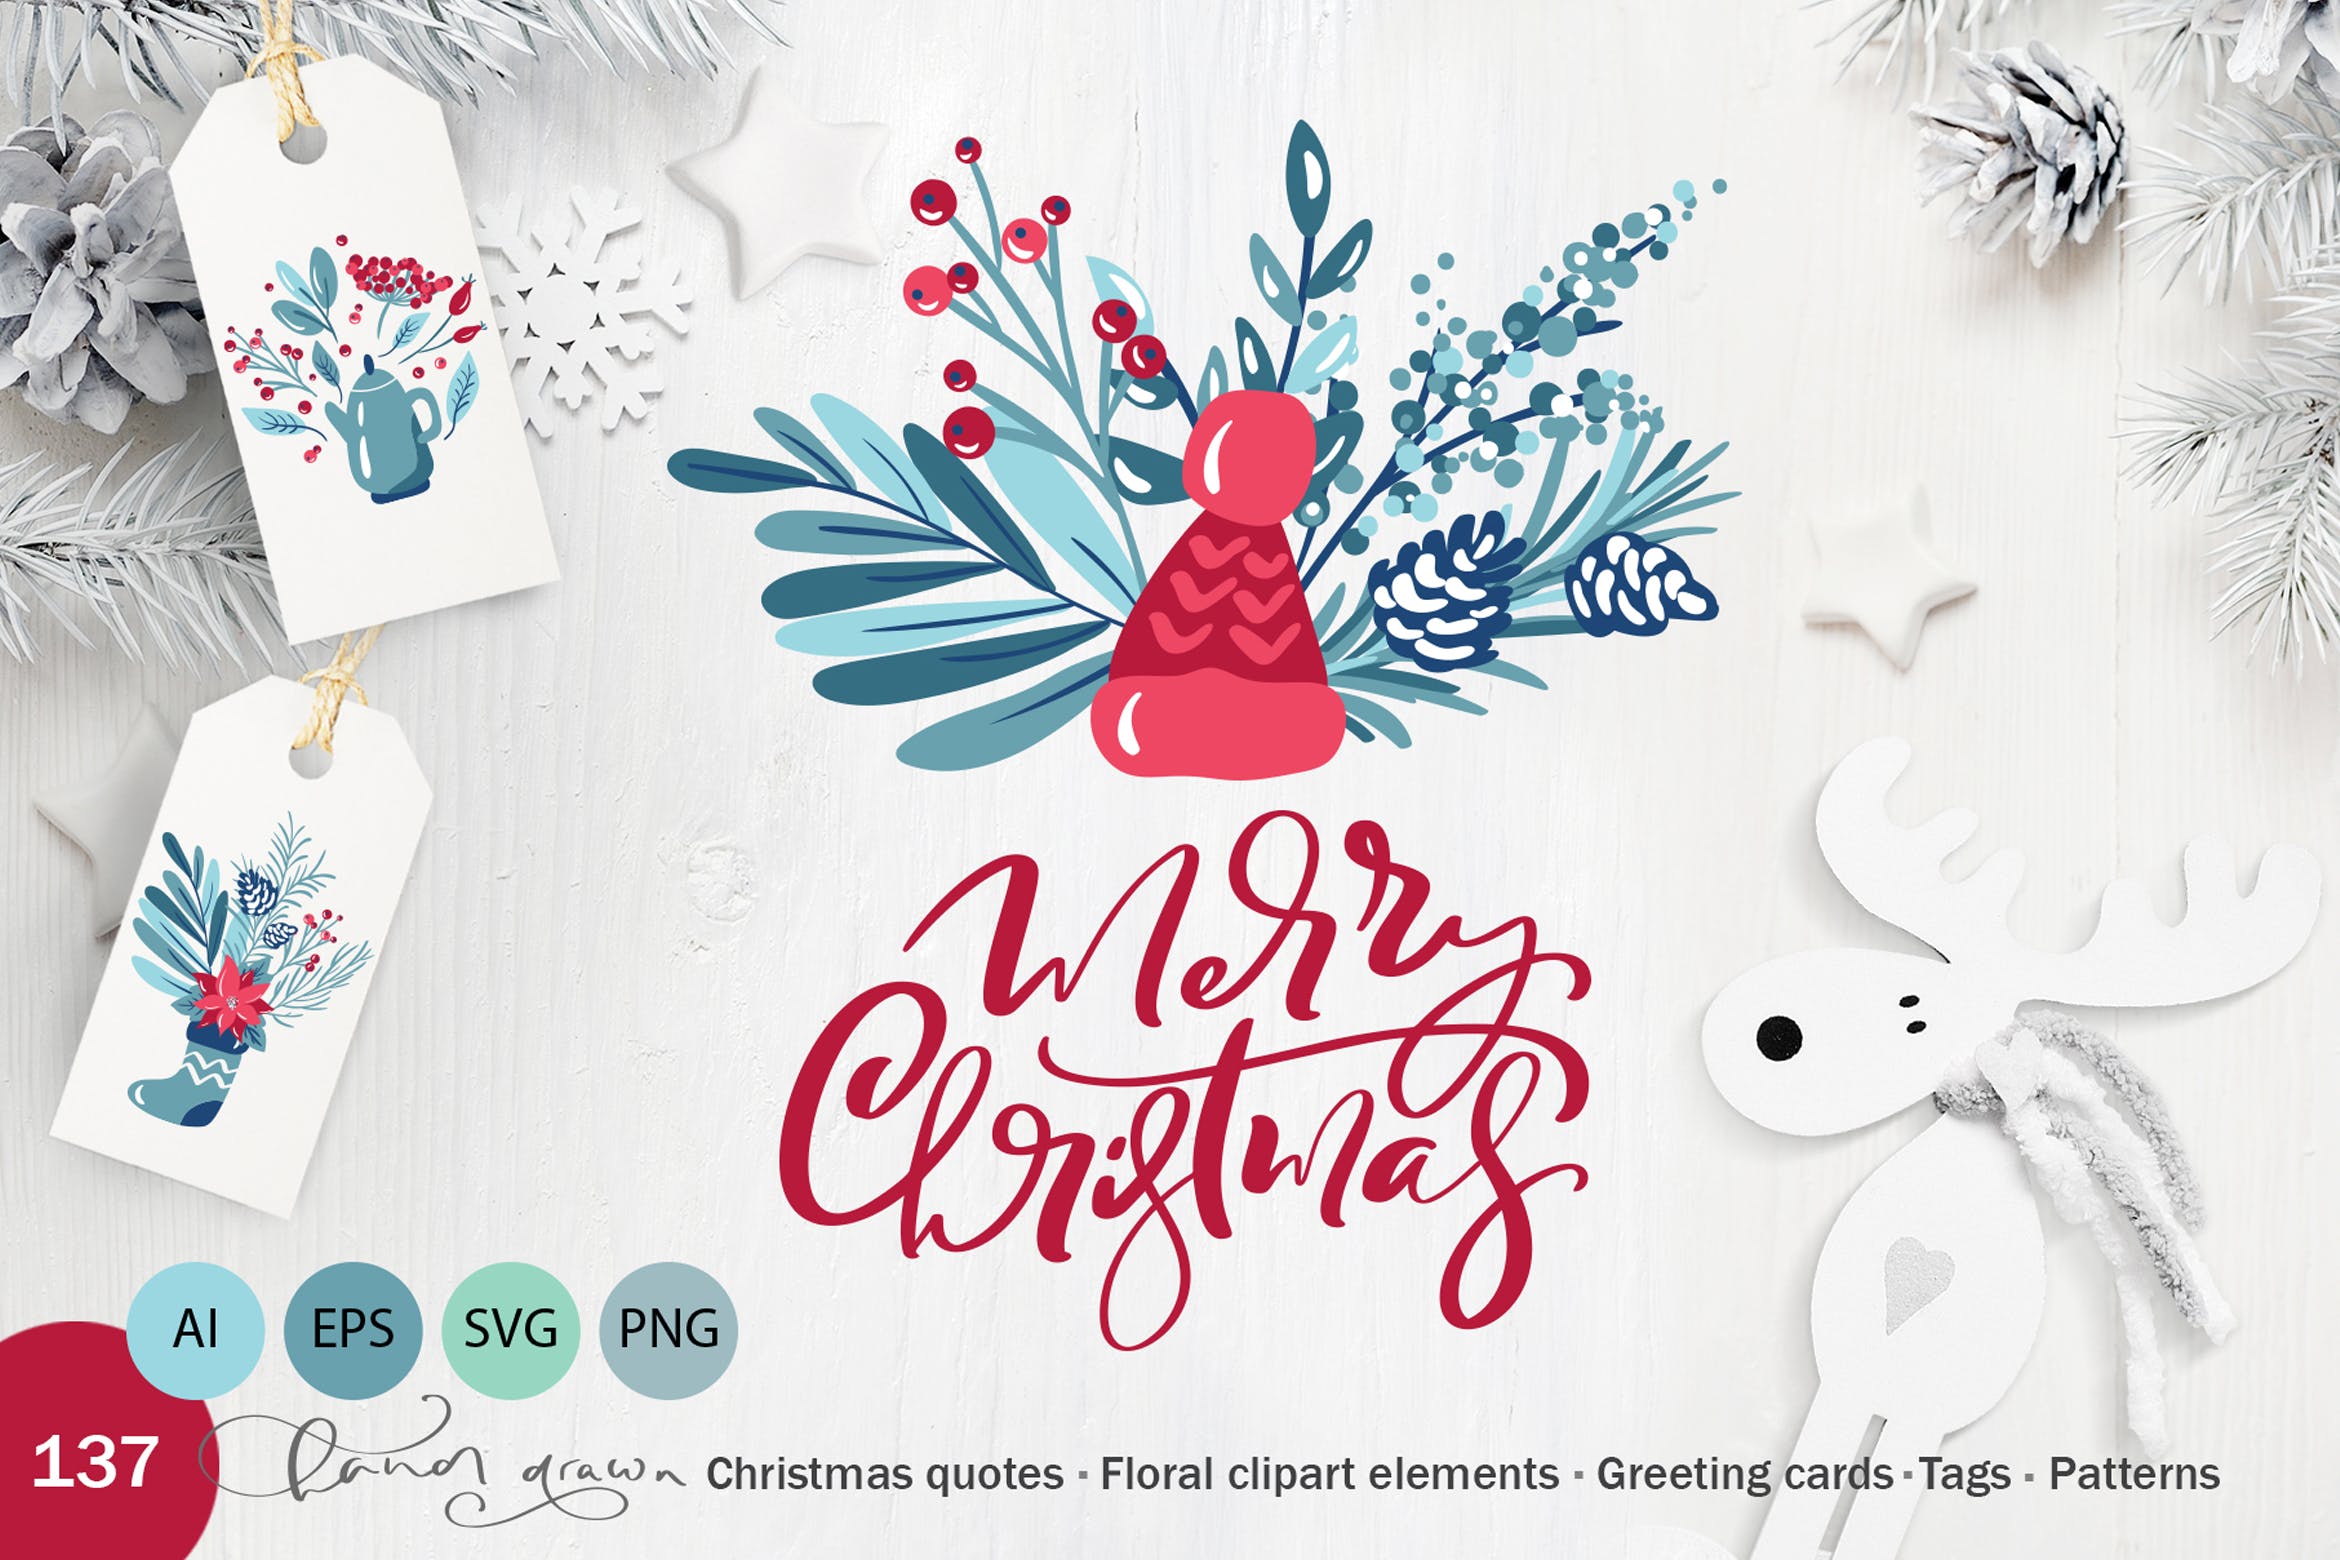 圣诞节主题元素水彩手绘设计素材 Christmas floral holiday elements插图